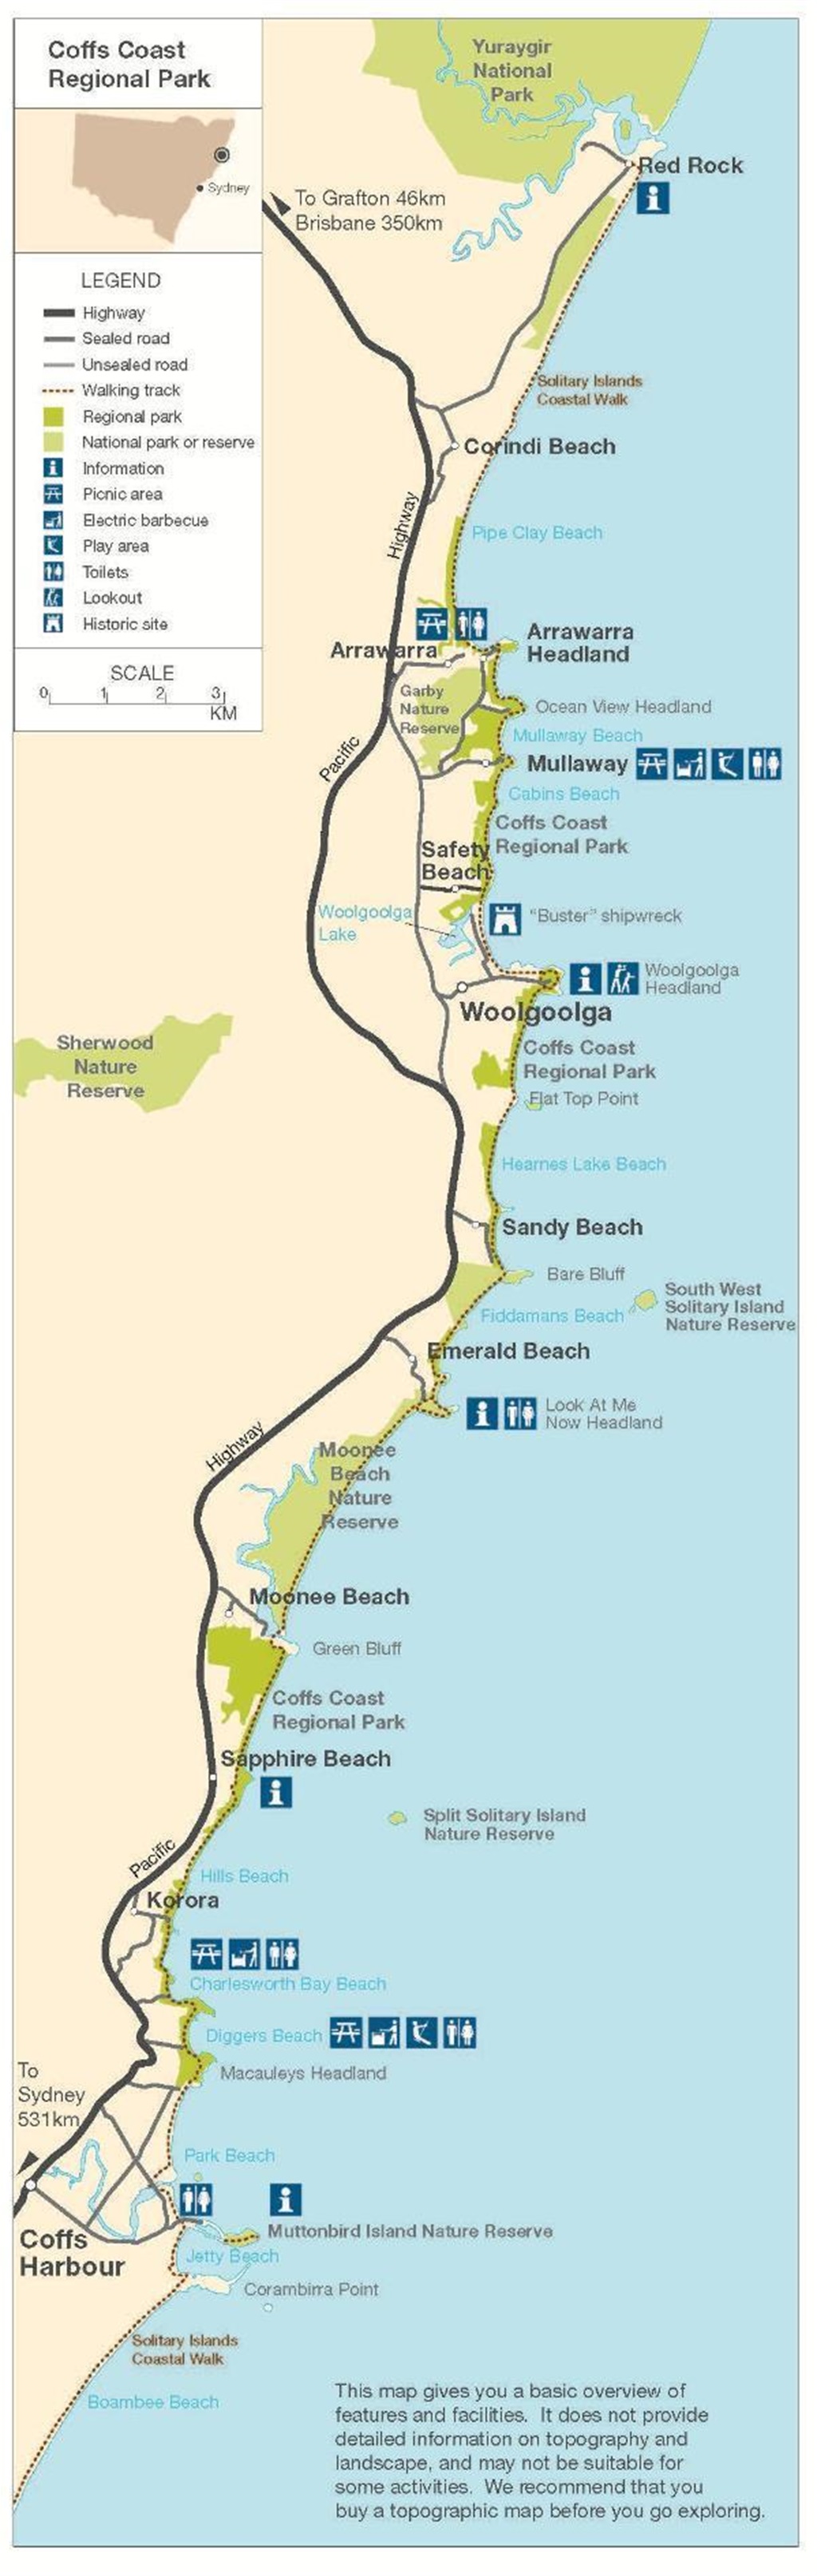 coffs coast regional park map